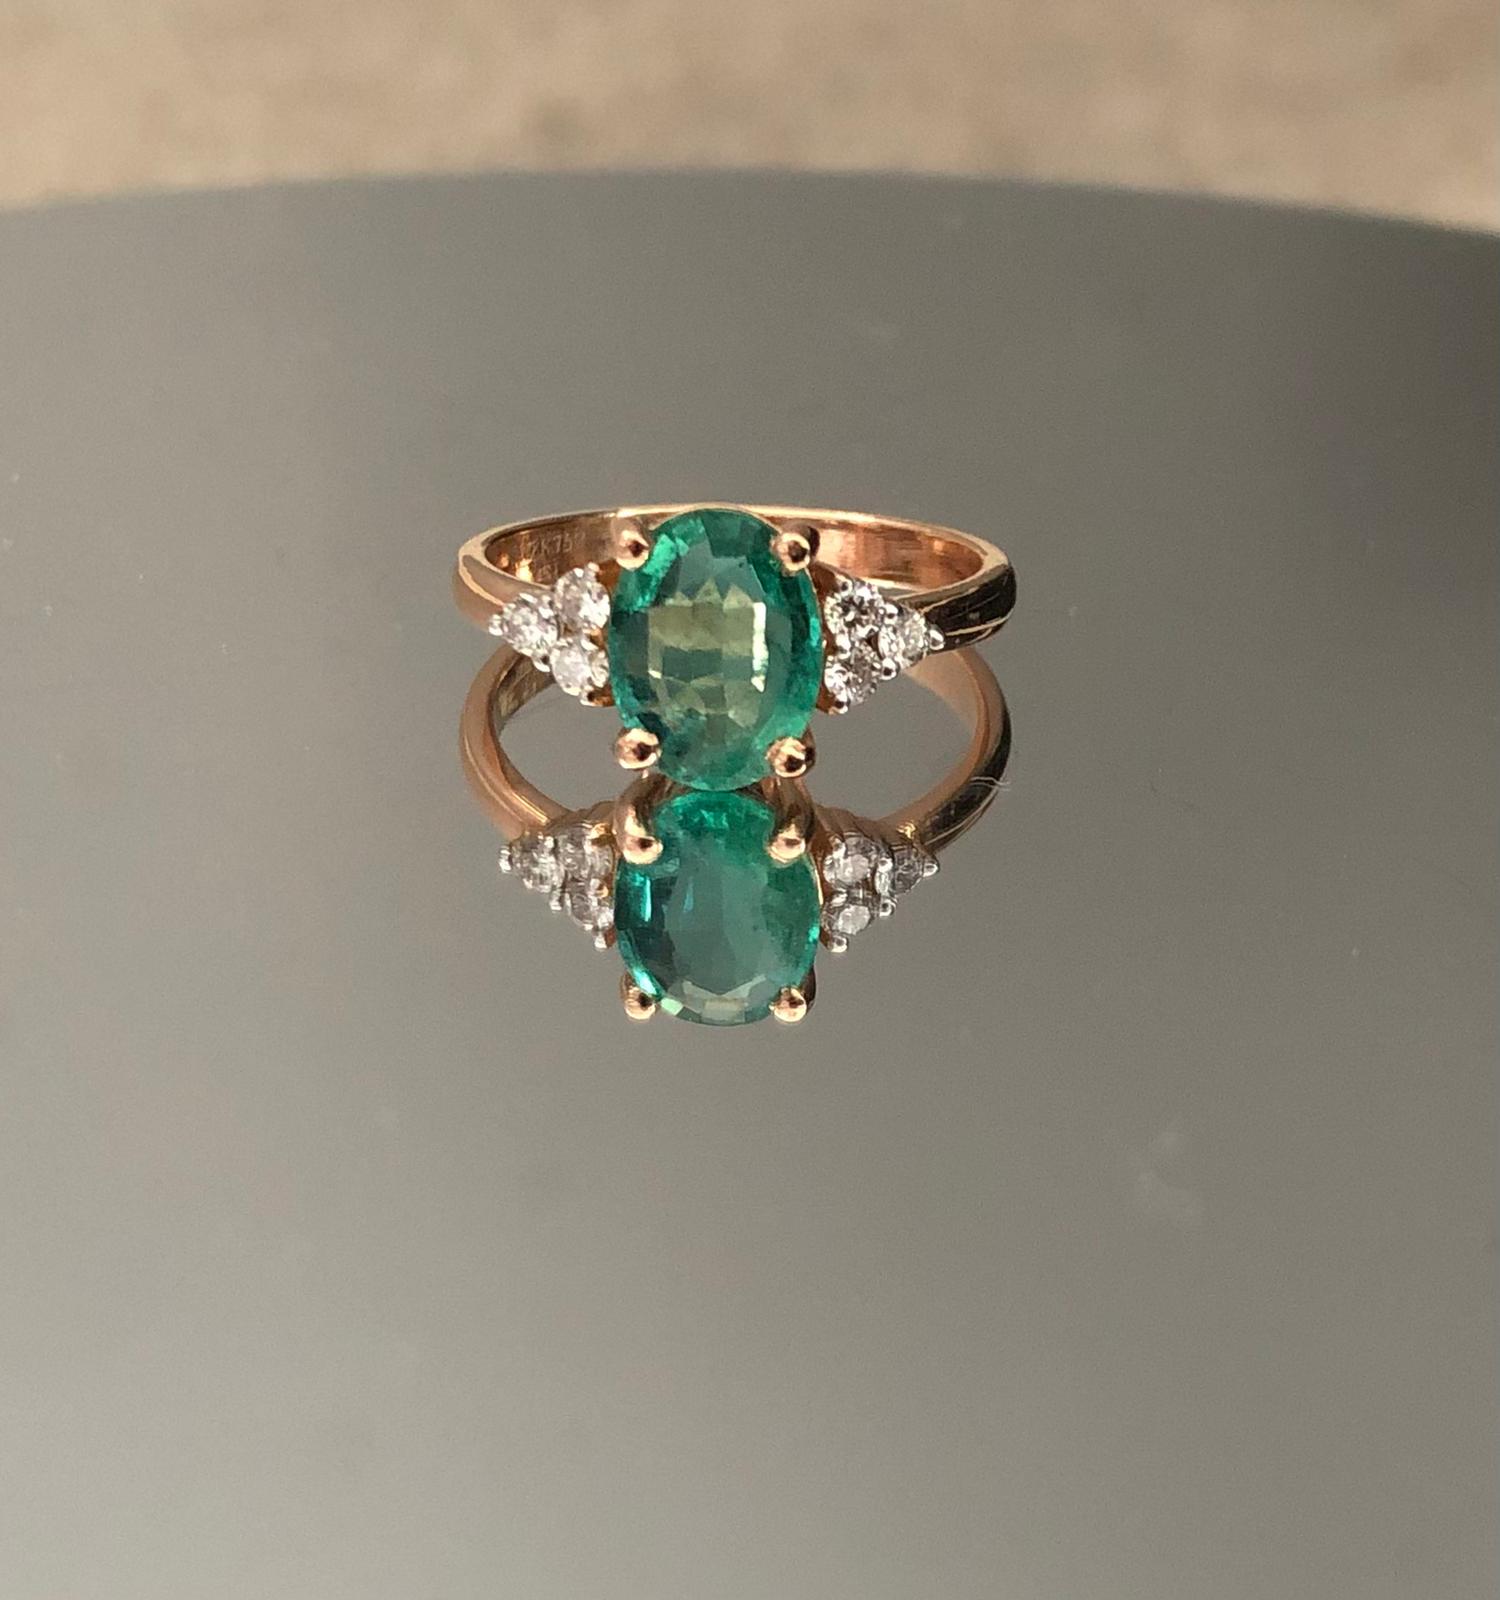 Beautiful 1.83 Carat Natural Emerald Ring With Natural Diamonds and 18k Gold - Image 3 of 5